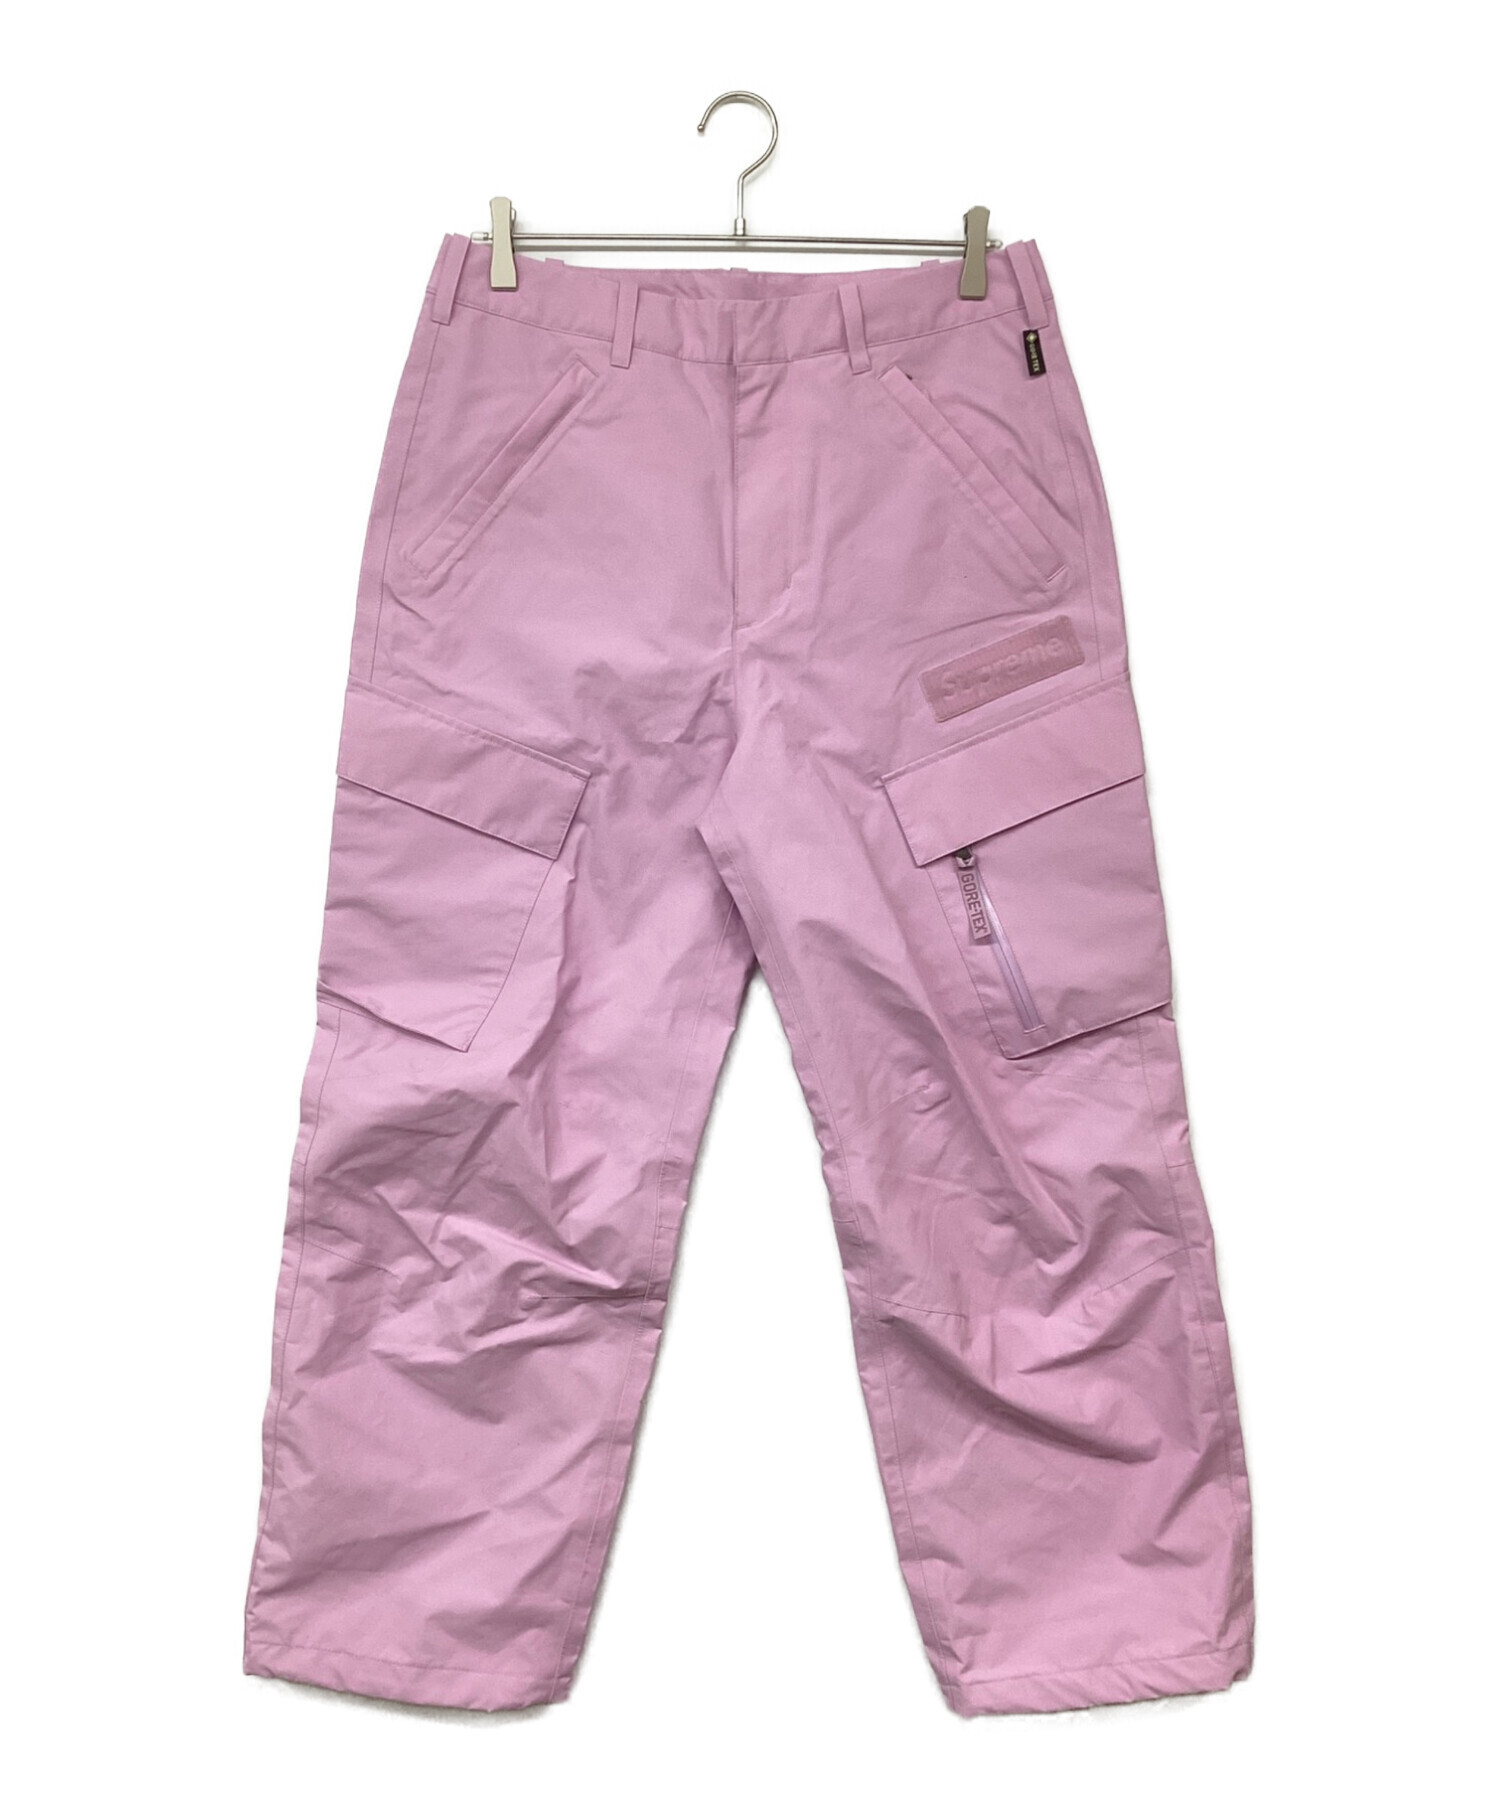 SUPREME (シュプリーム) GORE-TEX CARGO PANT ピンク サイズ:76cm (W30)